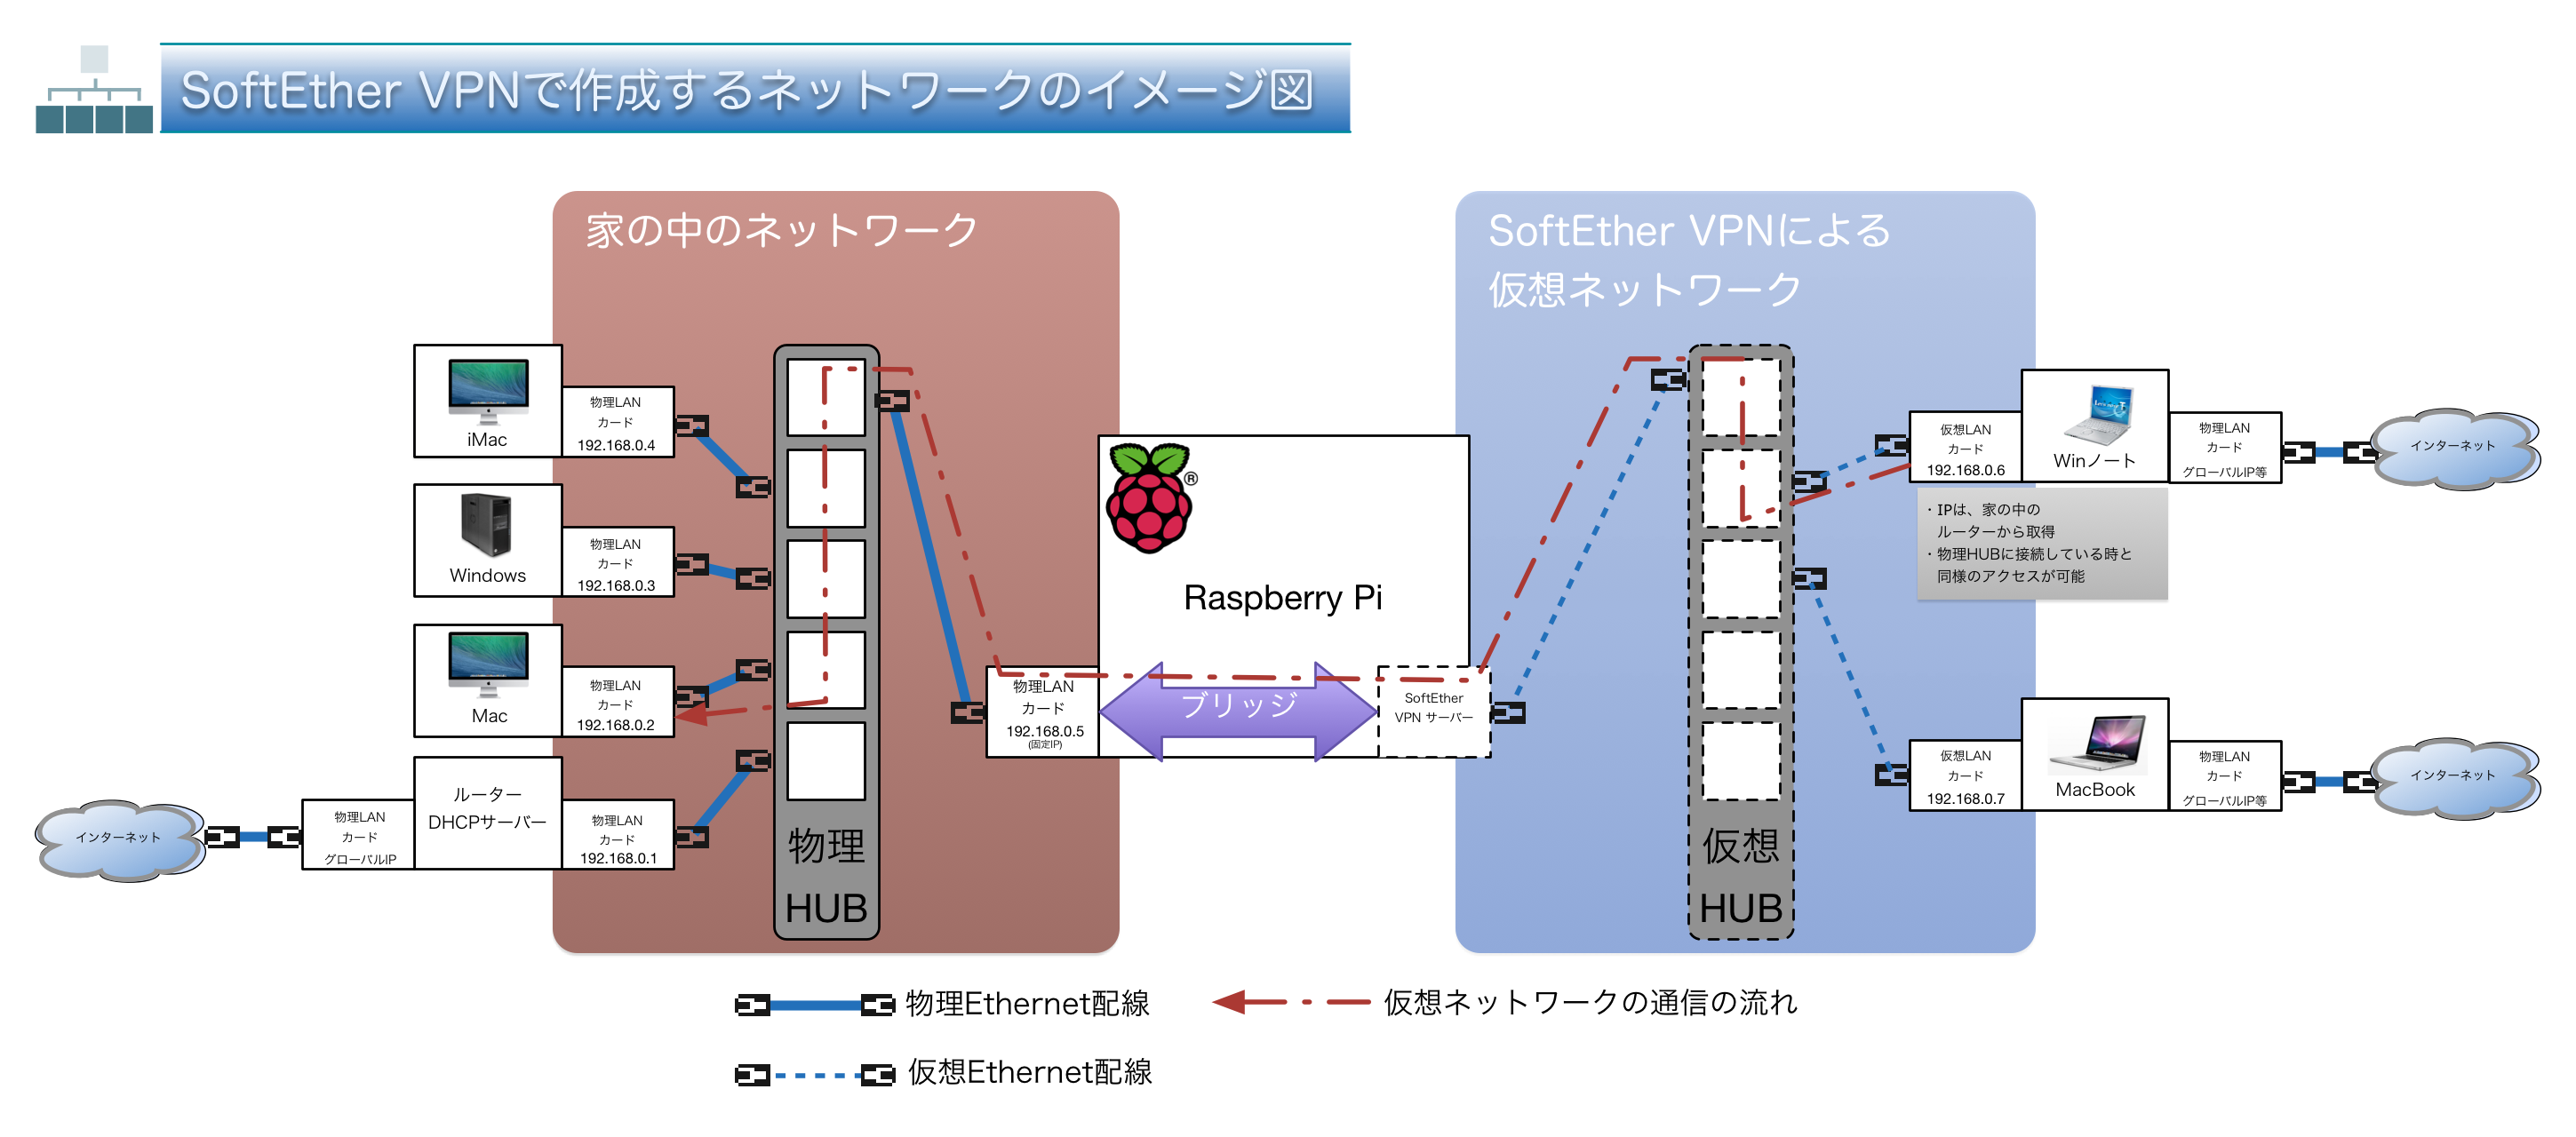 Softether vpn сервера. VPN Raspberry Pi. Raspberry Pi DHCP Server. Порты softether. Мосты в впн.